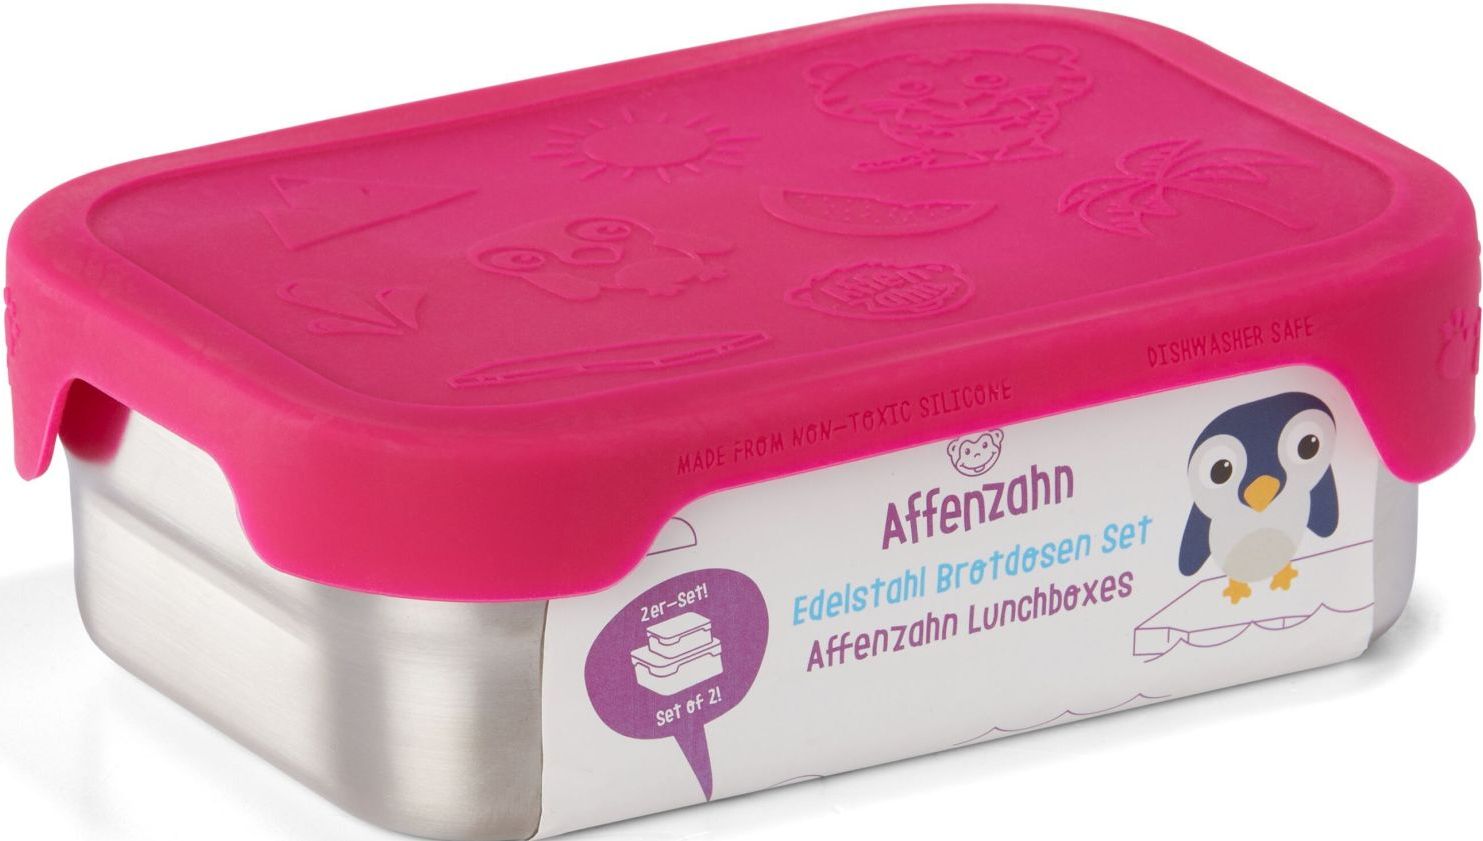 Affenzahn Stainless Steel Lunchbox Set Owl - silver pink